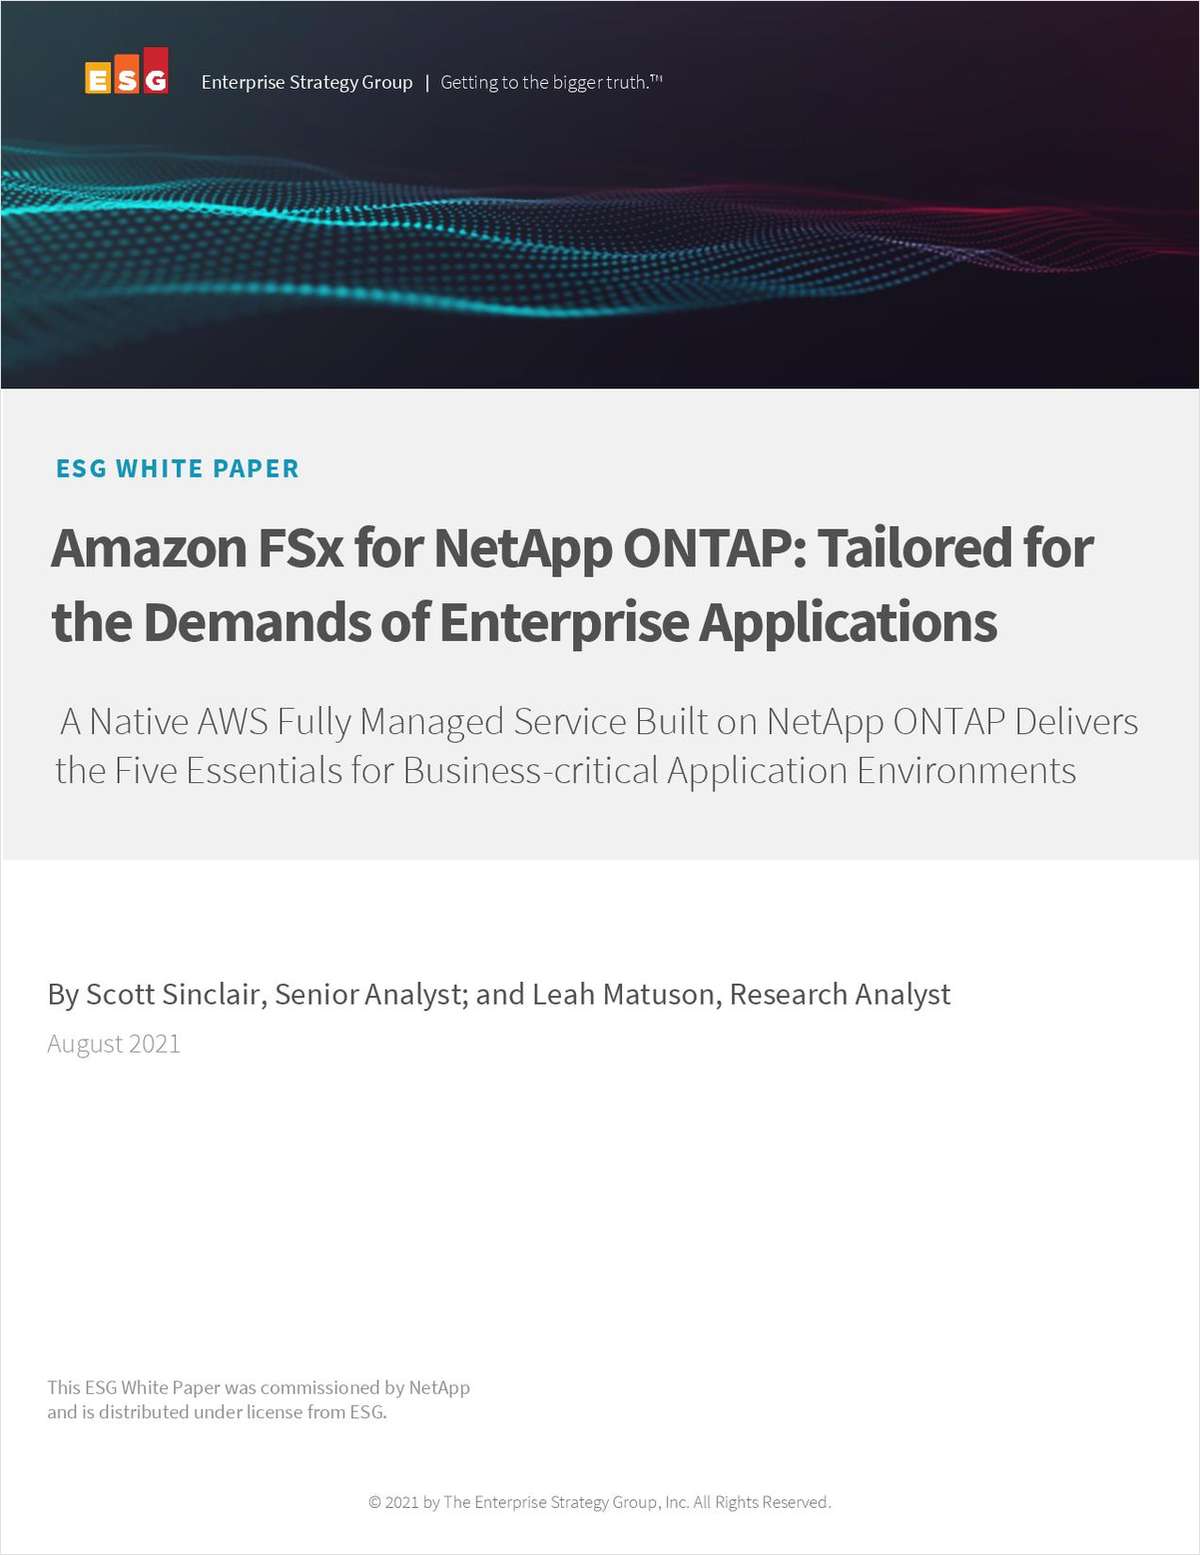 Amazon FSx for NetApp ONTAP: Tailored for the Demands of Enterprise Applications